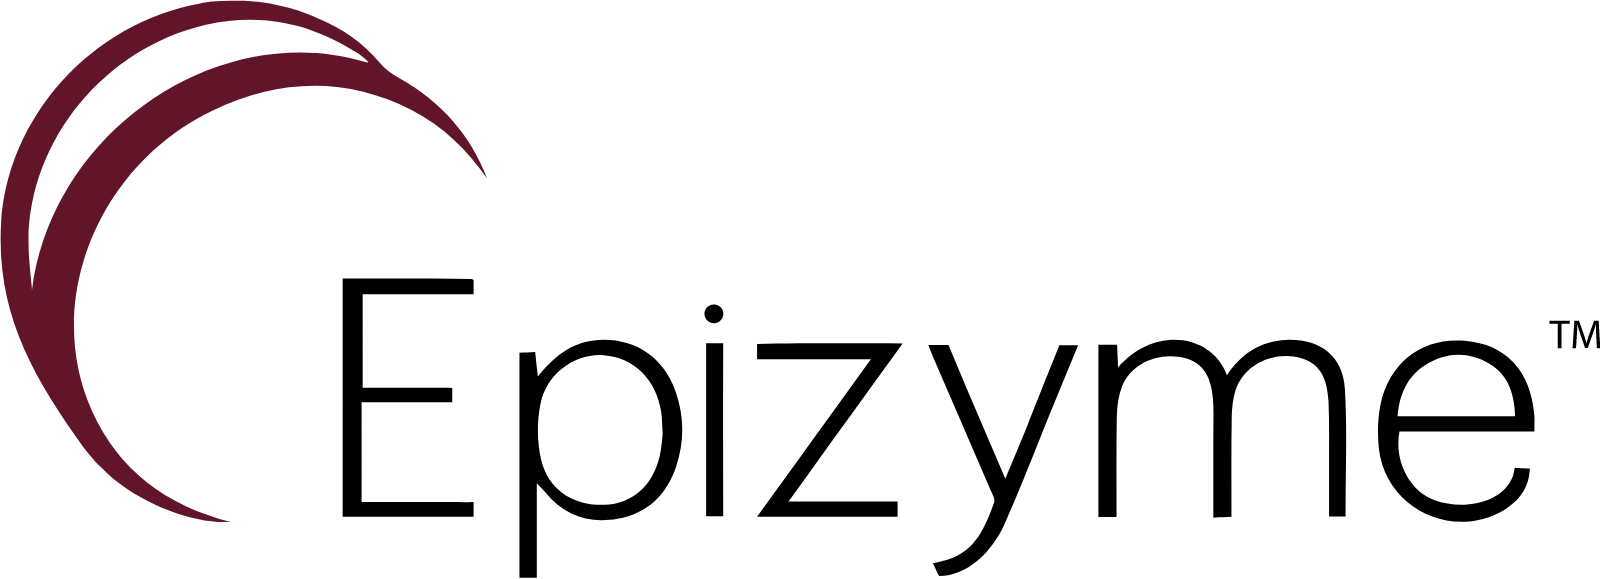 Epizyme logo large (transparent PNG)